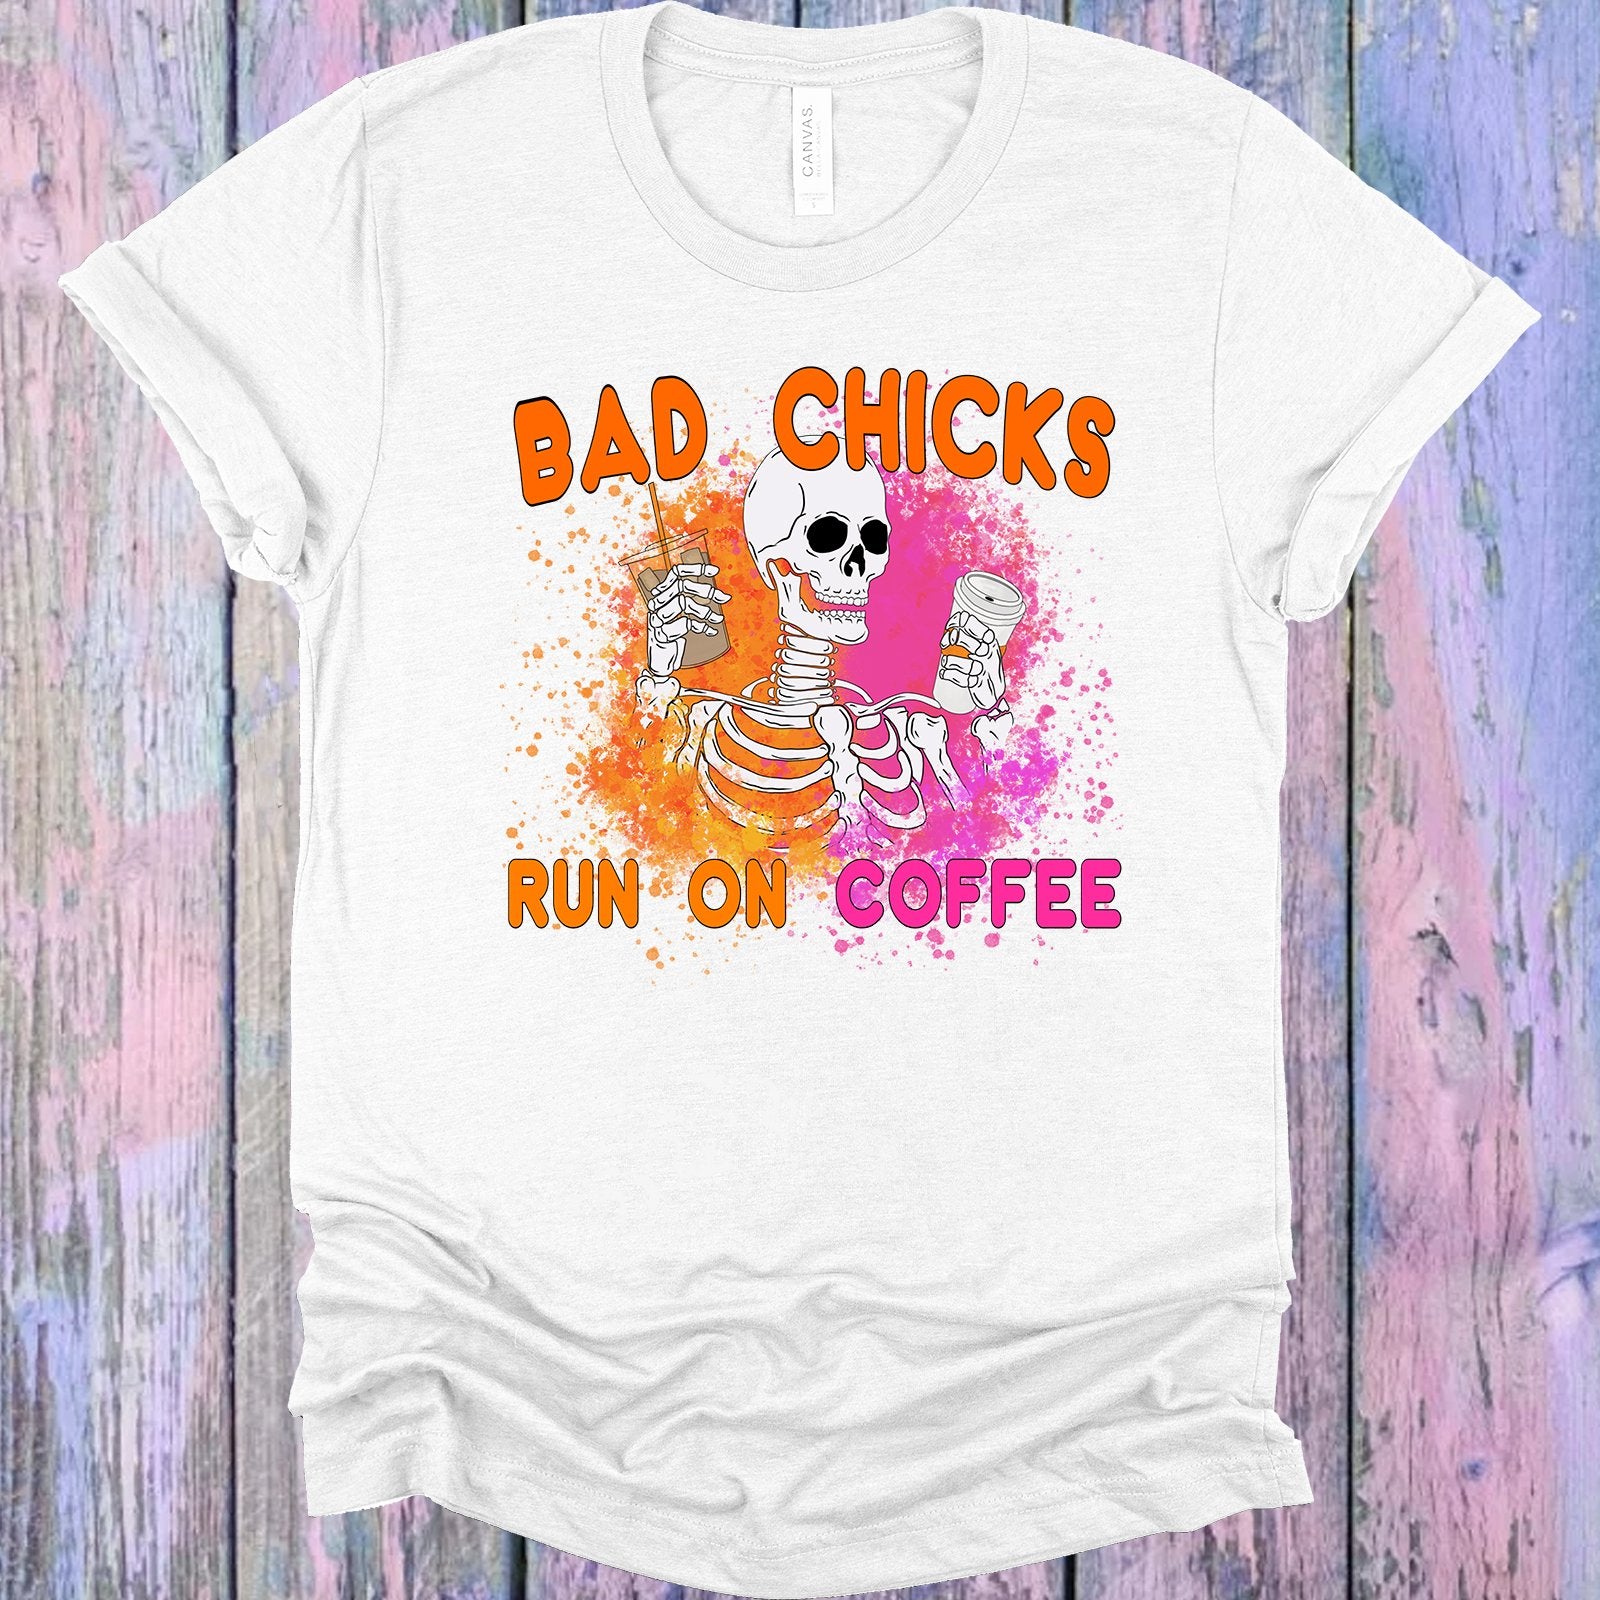 Bad Chicks Run On Coffee Graphic Tee Graphic Tee